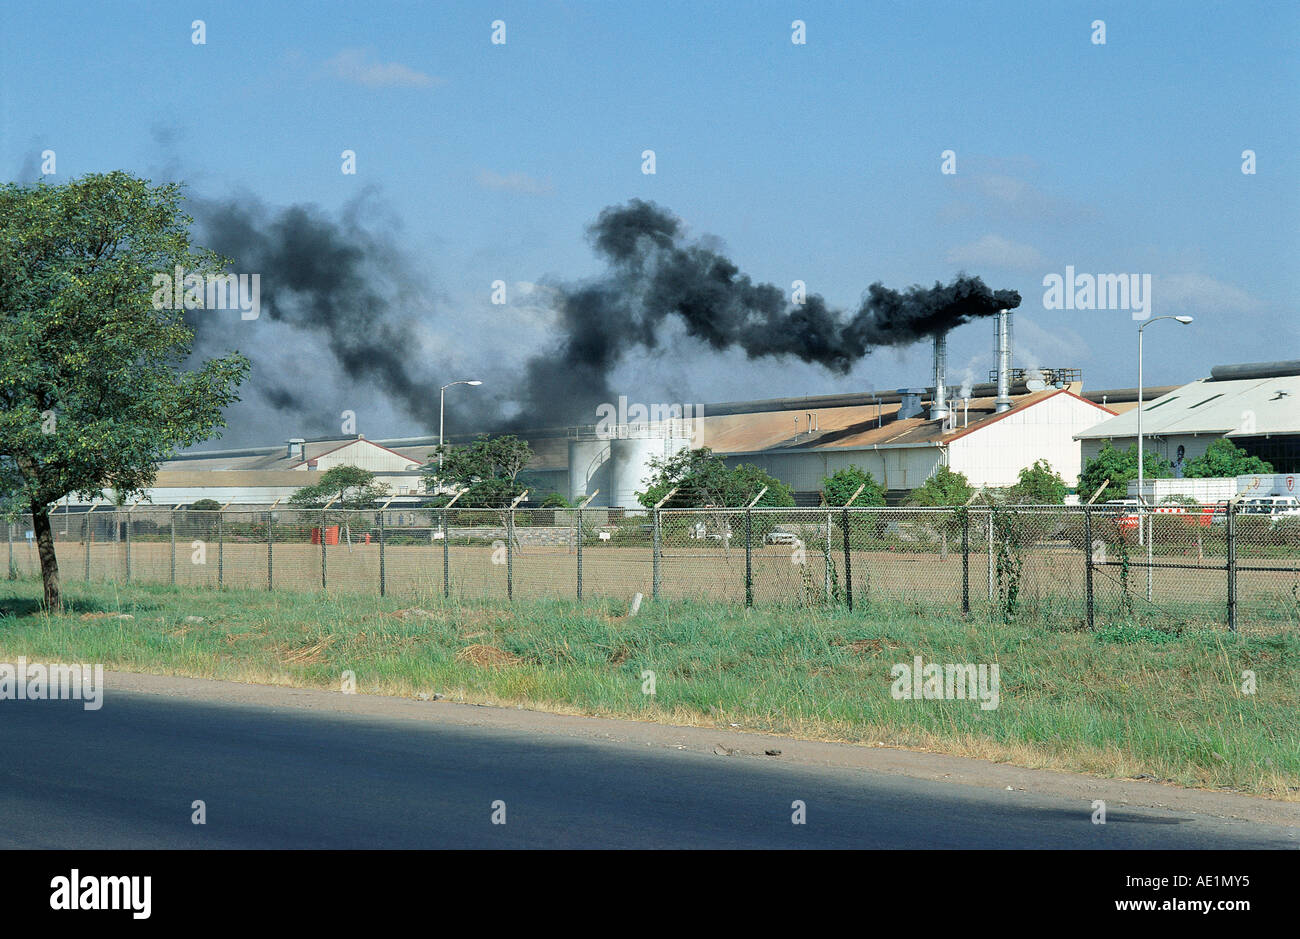 Fumo nero eruttazione da un camino in fabbrica nei pressi di Uhuru Highway nella zona industriale di Nairobi Kenya Africa orientale Foto Stock